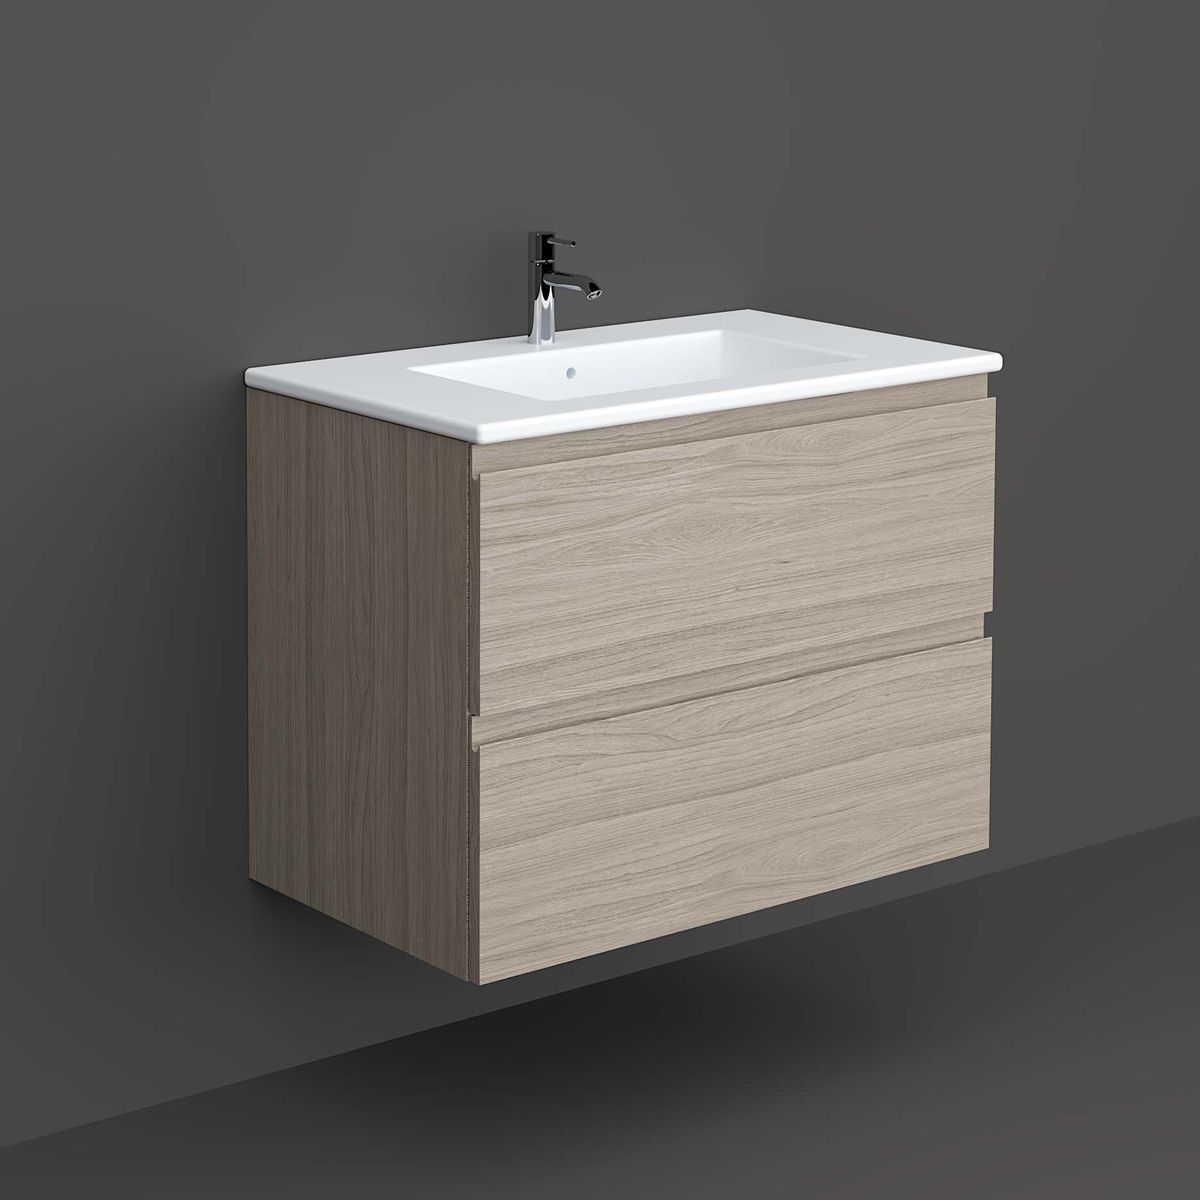 Modular bathroom furniture